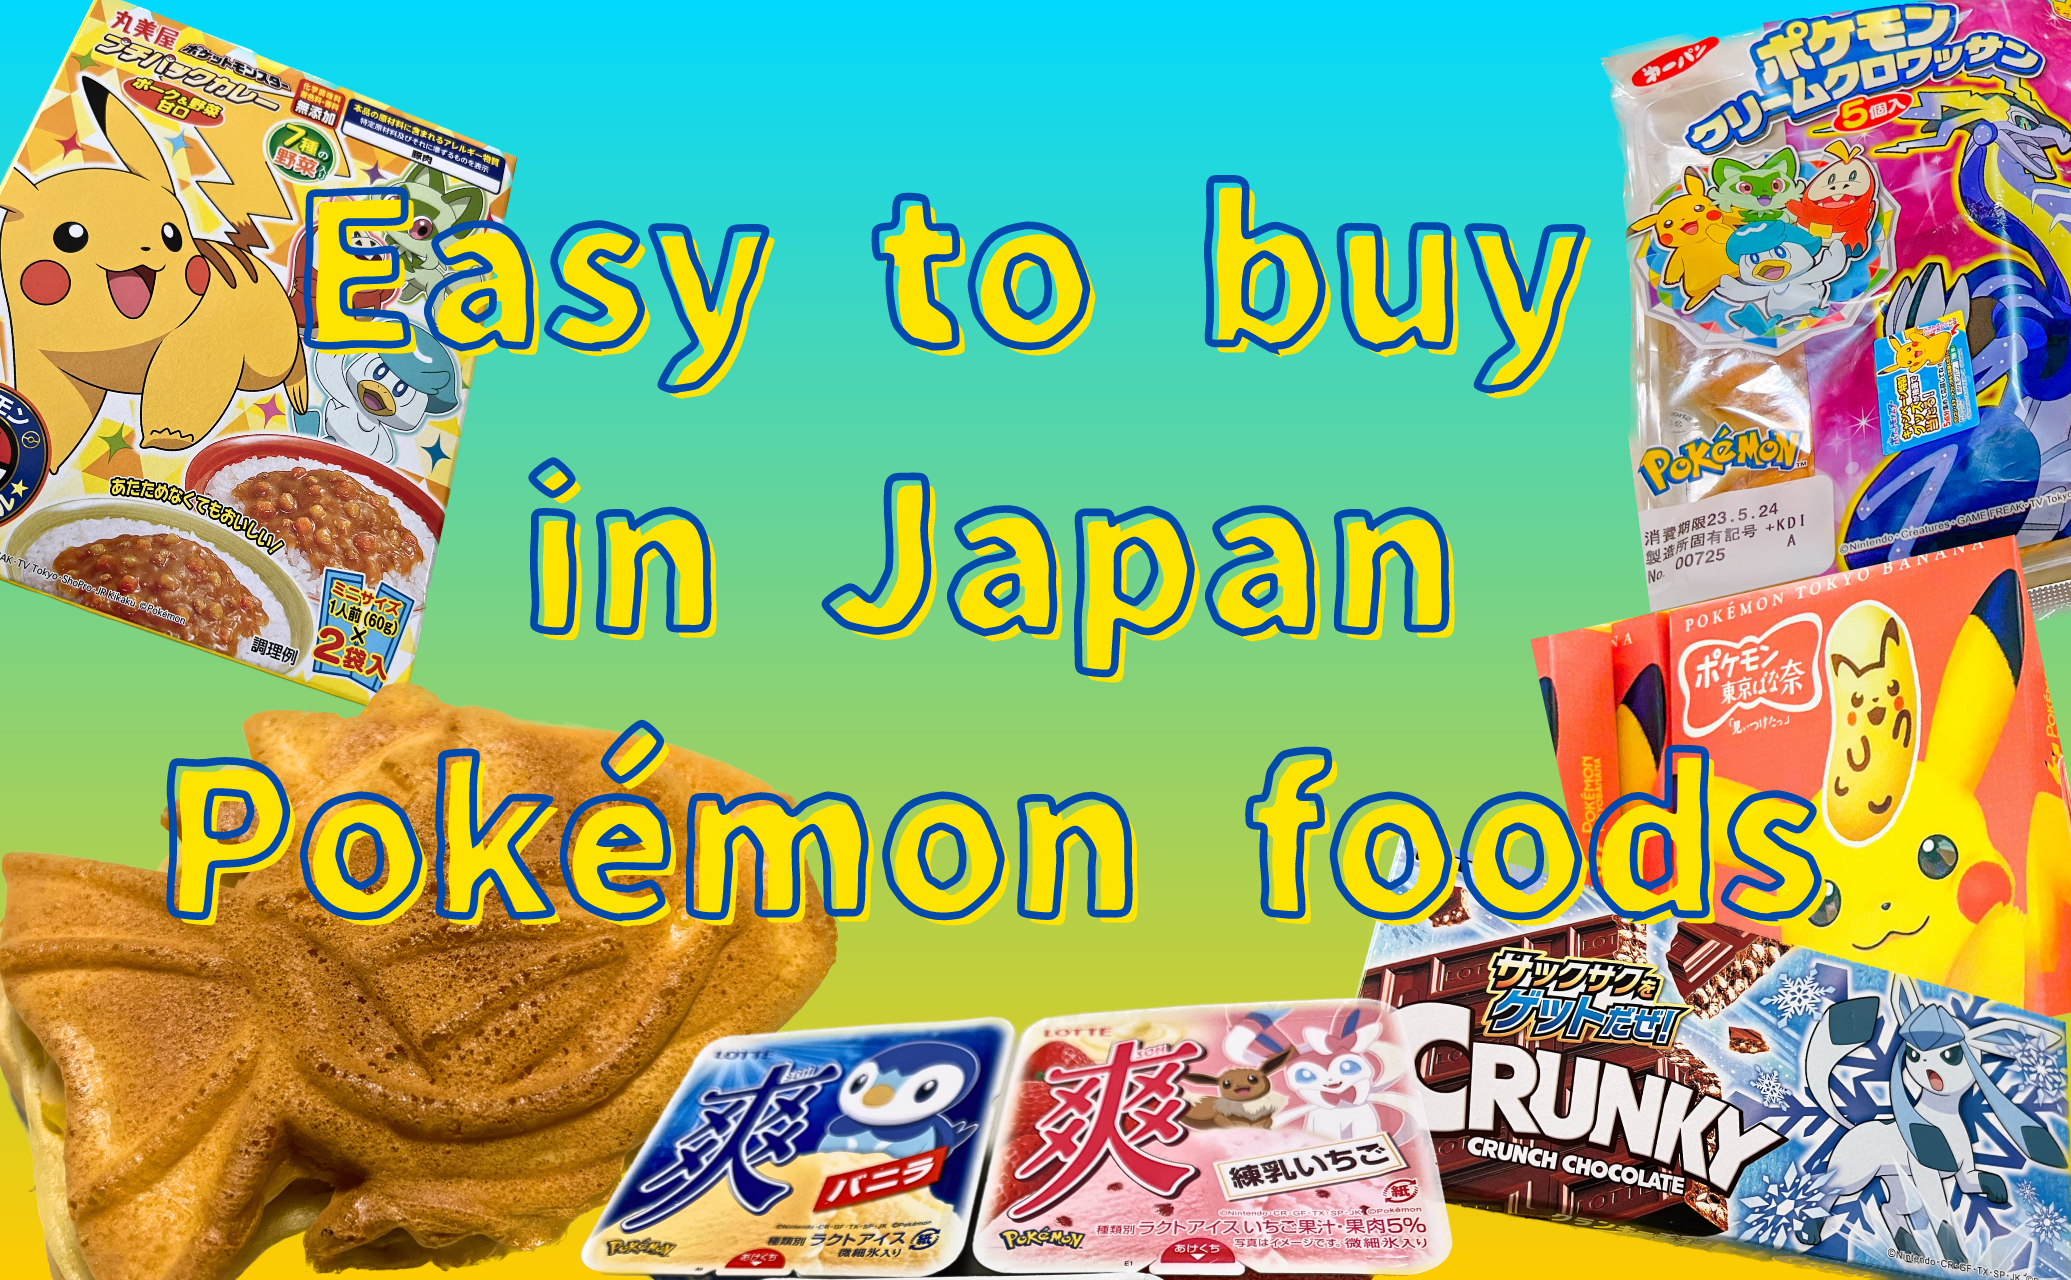 Easy to buy! Pokémon foods